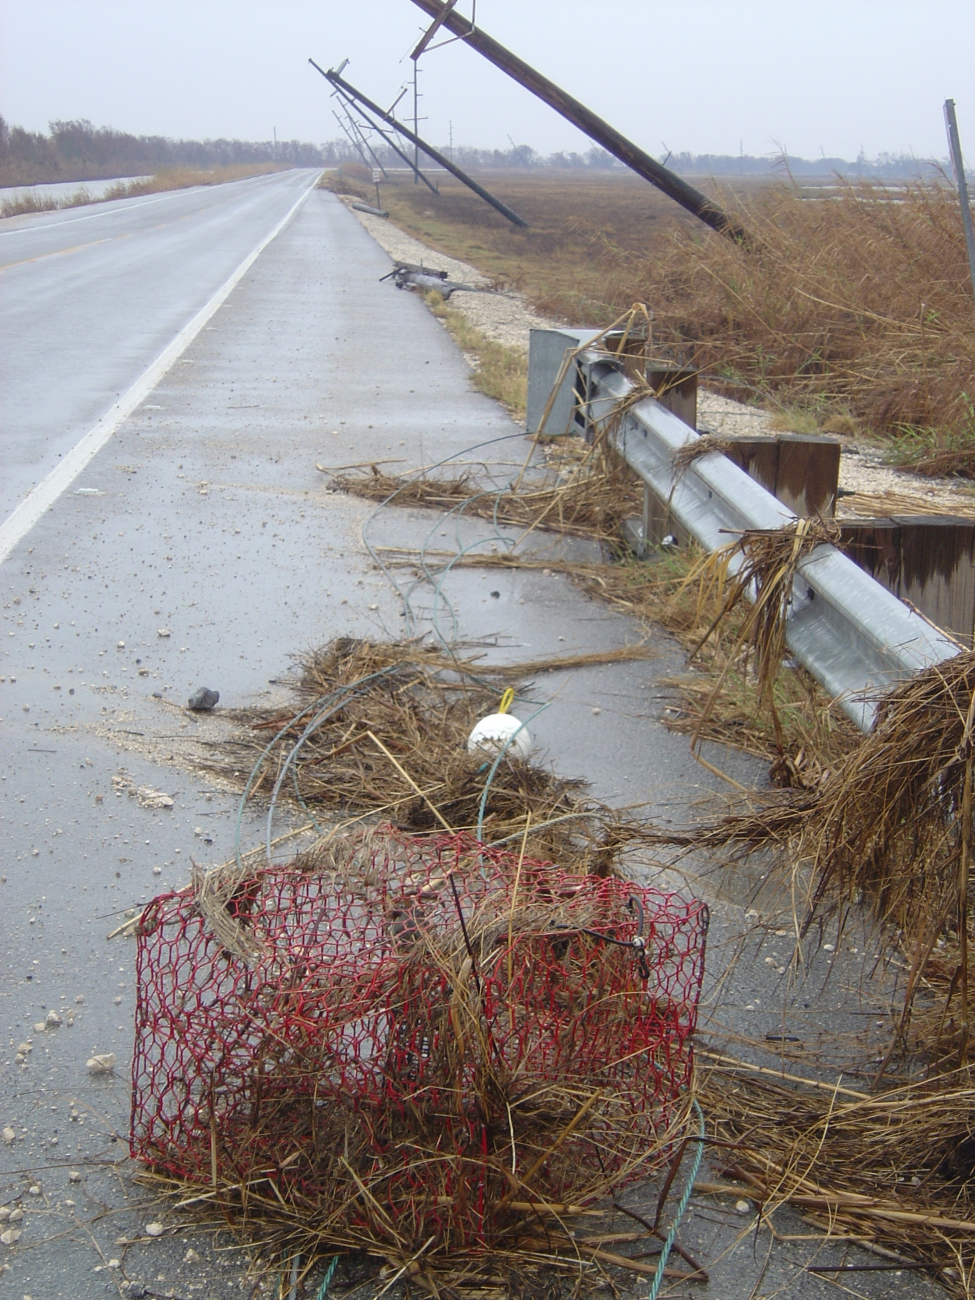 Crab pot on road after passage of Hurricane Rita